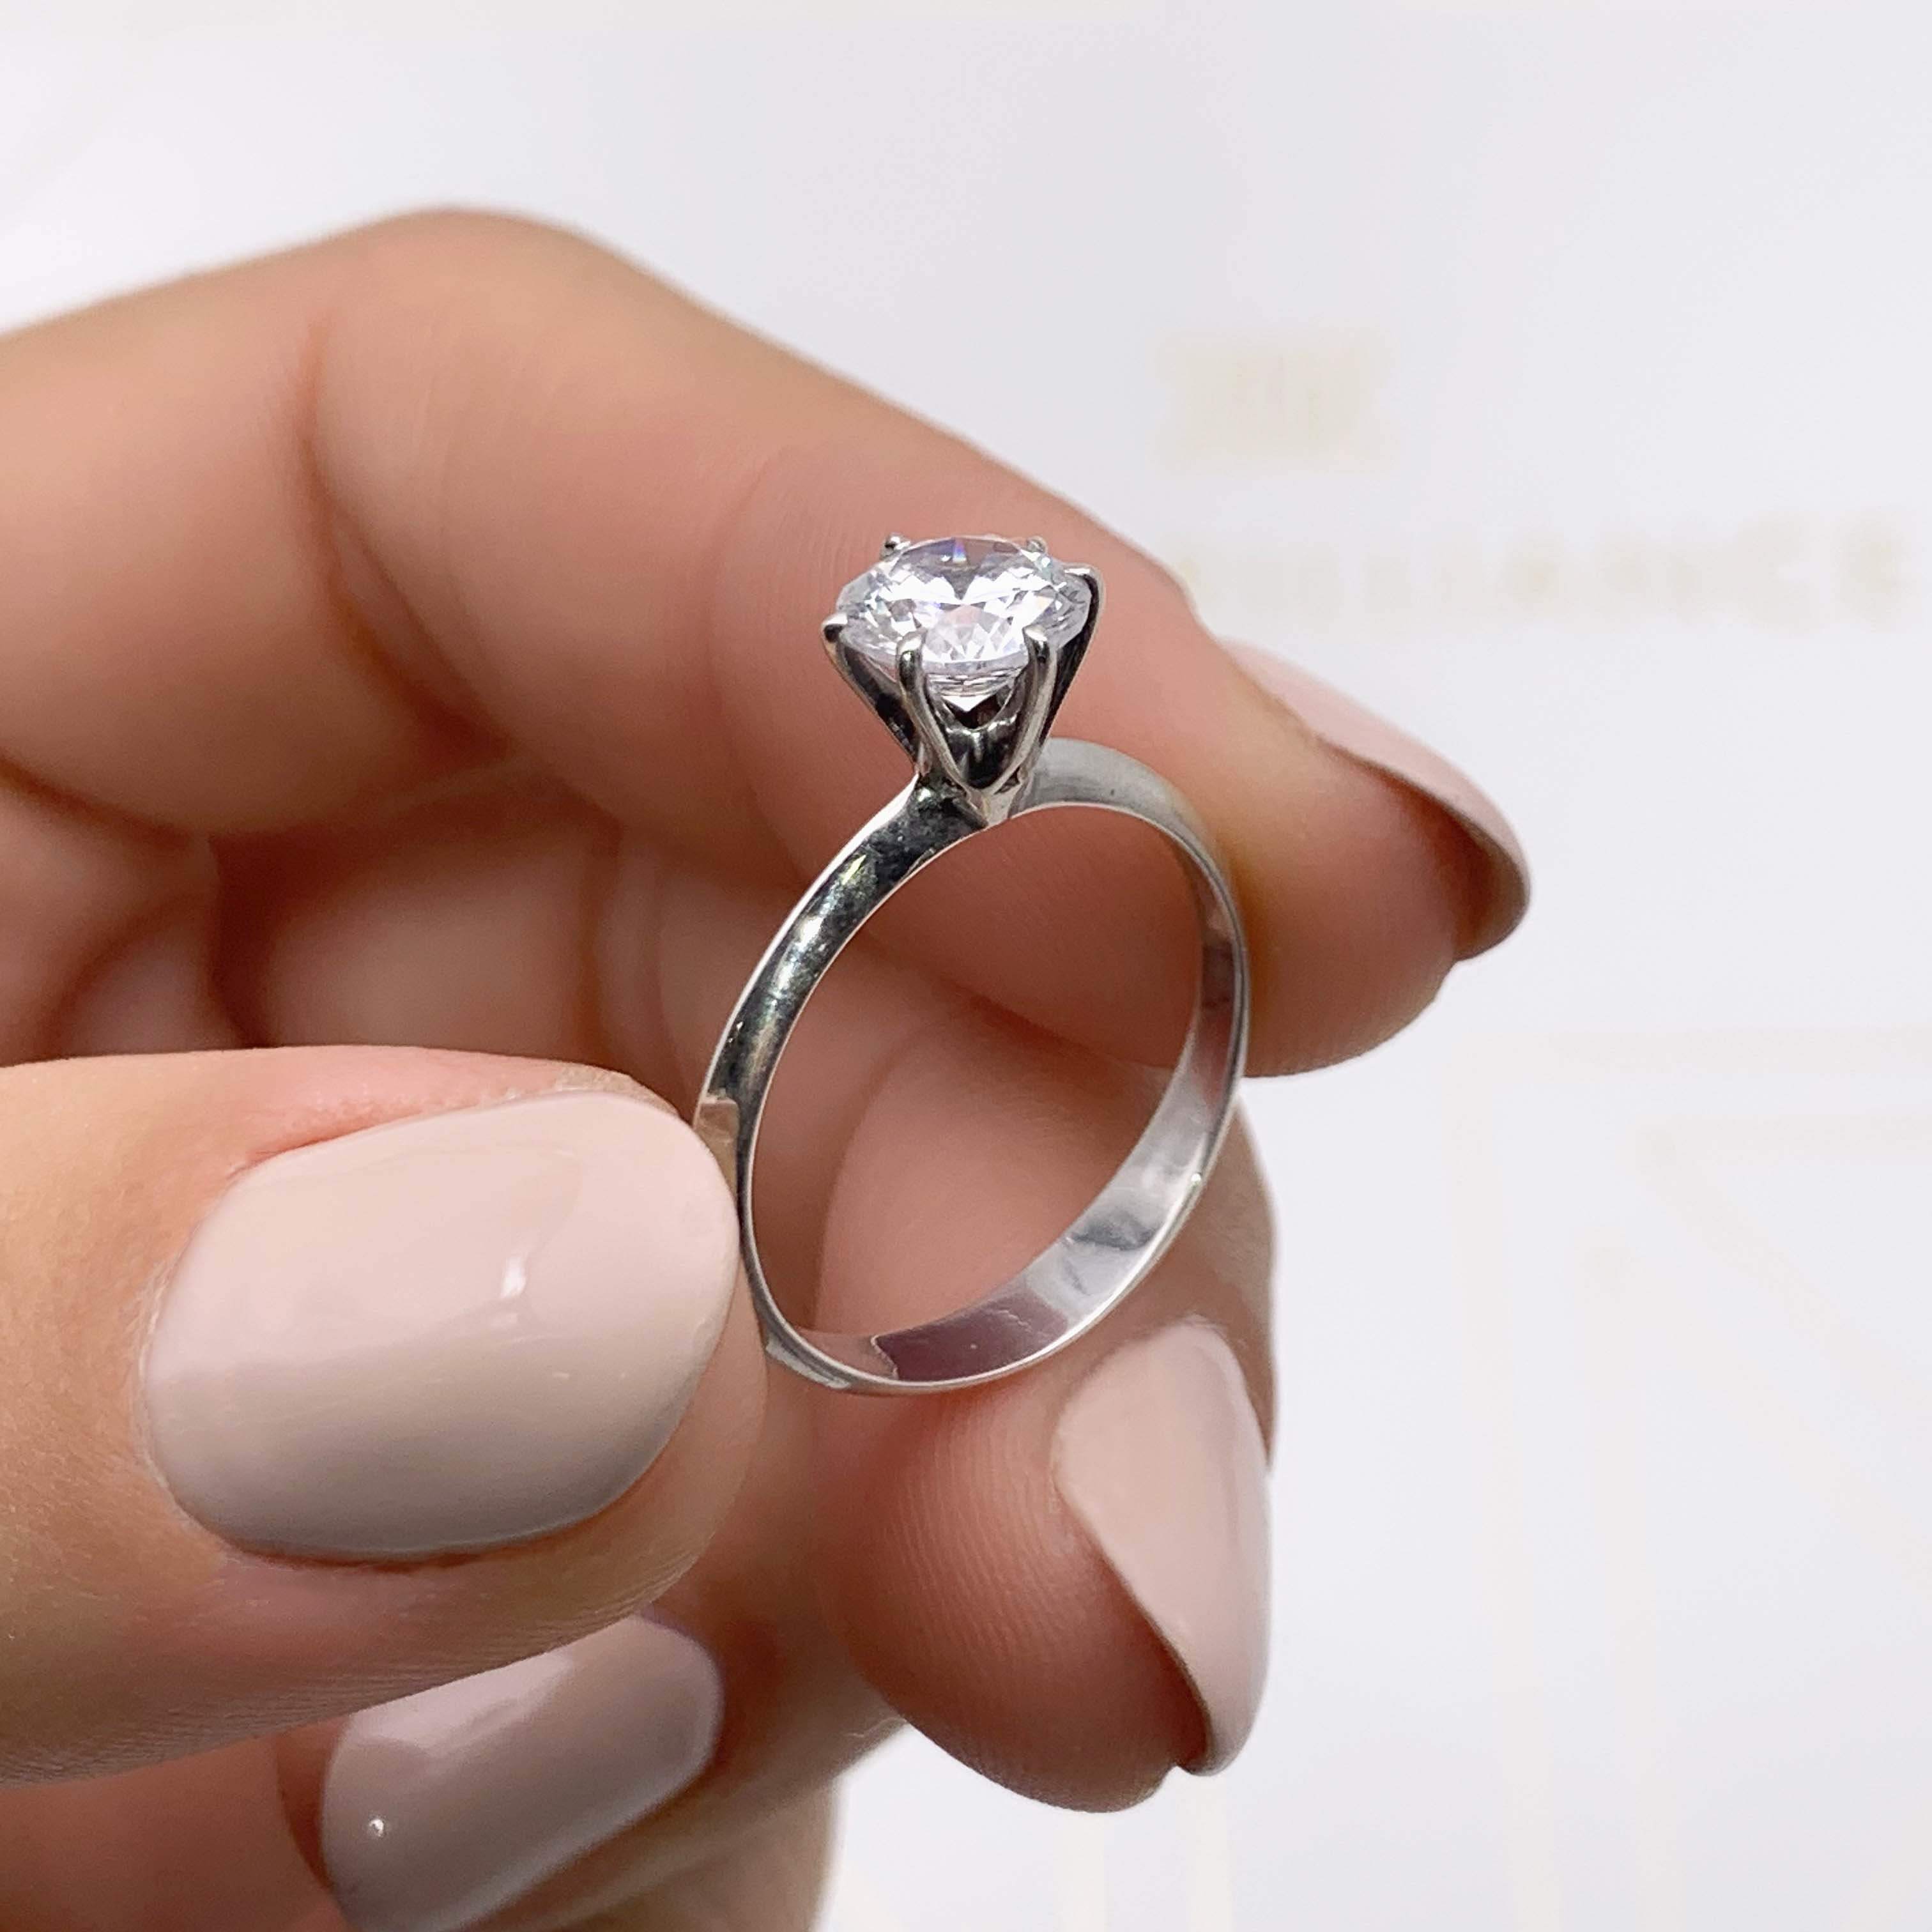 1 Carat Near-Flawless Diamond Ring In White Gold